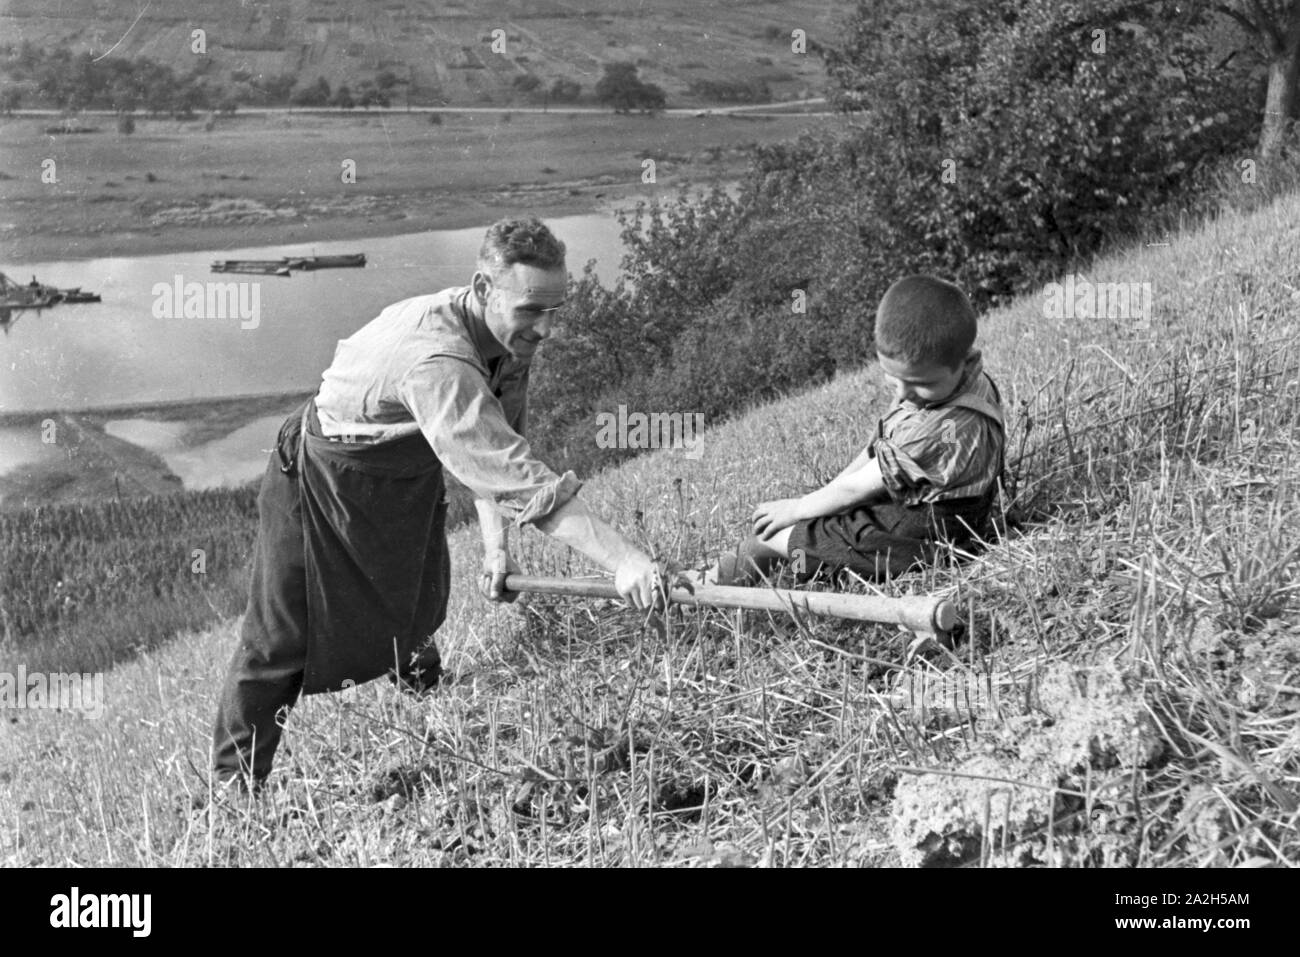 Moselbauer bei der Arbeit im Weinberg, Deutschland 1930 er Jahre. Vigneron au travail dans la vigne, l'Allemagne des années 1930. Banque D'Images